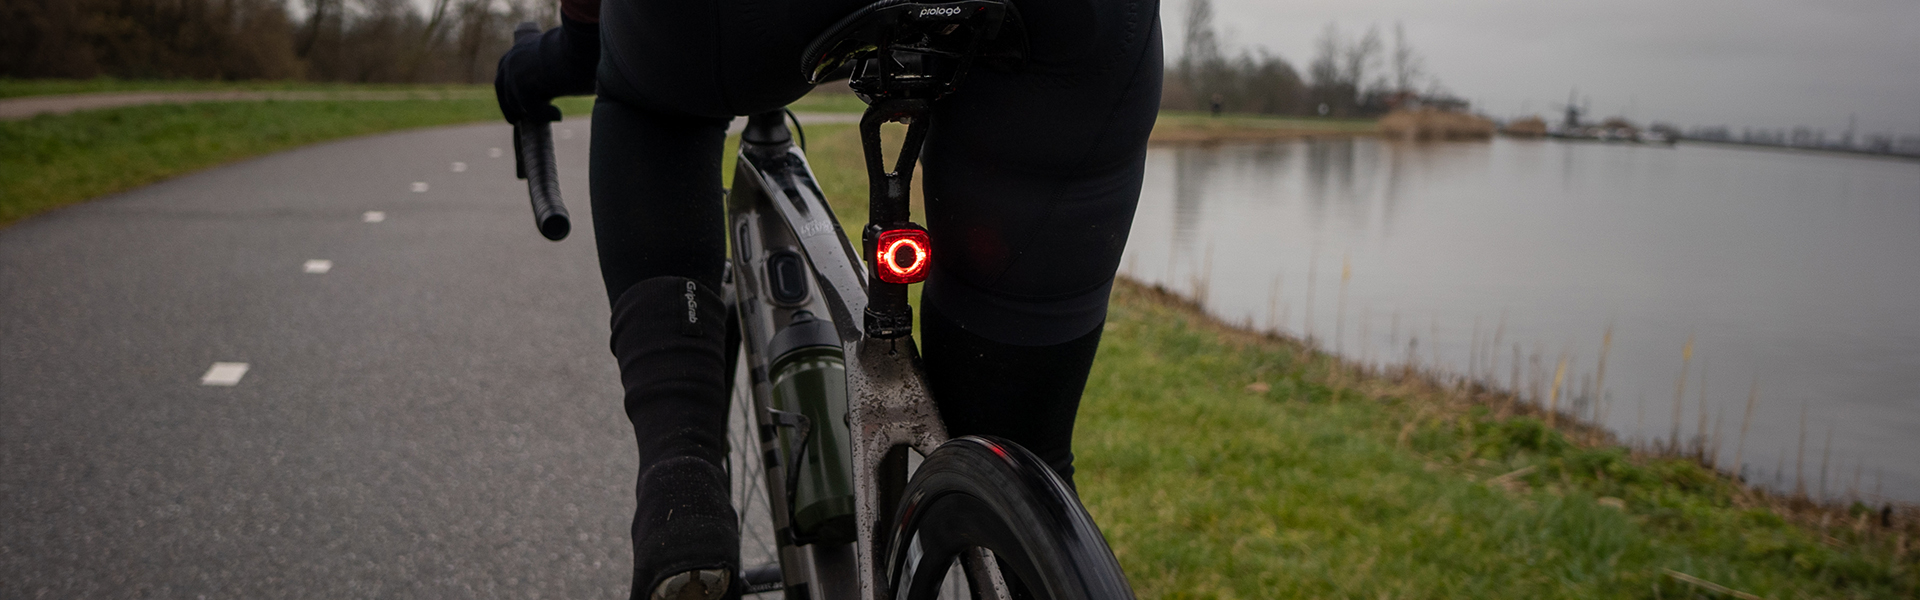 Sate-lite 50 LUX USB rechargeable bike light StVZO eletric bike front light OSRAM LED waterproof